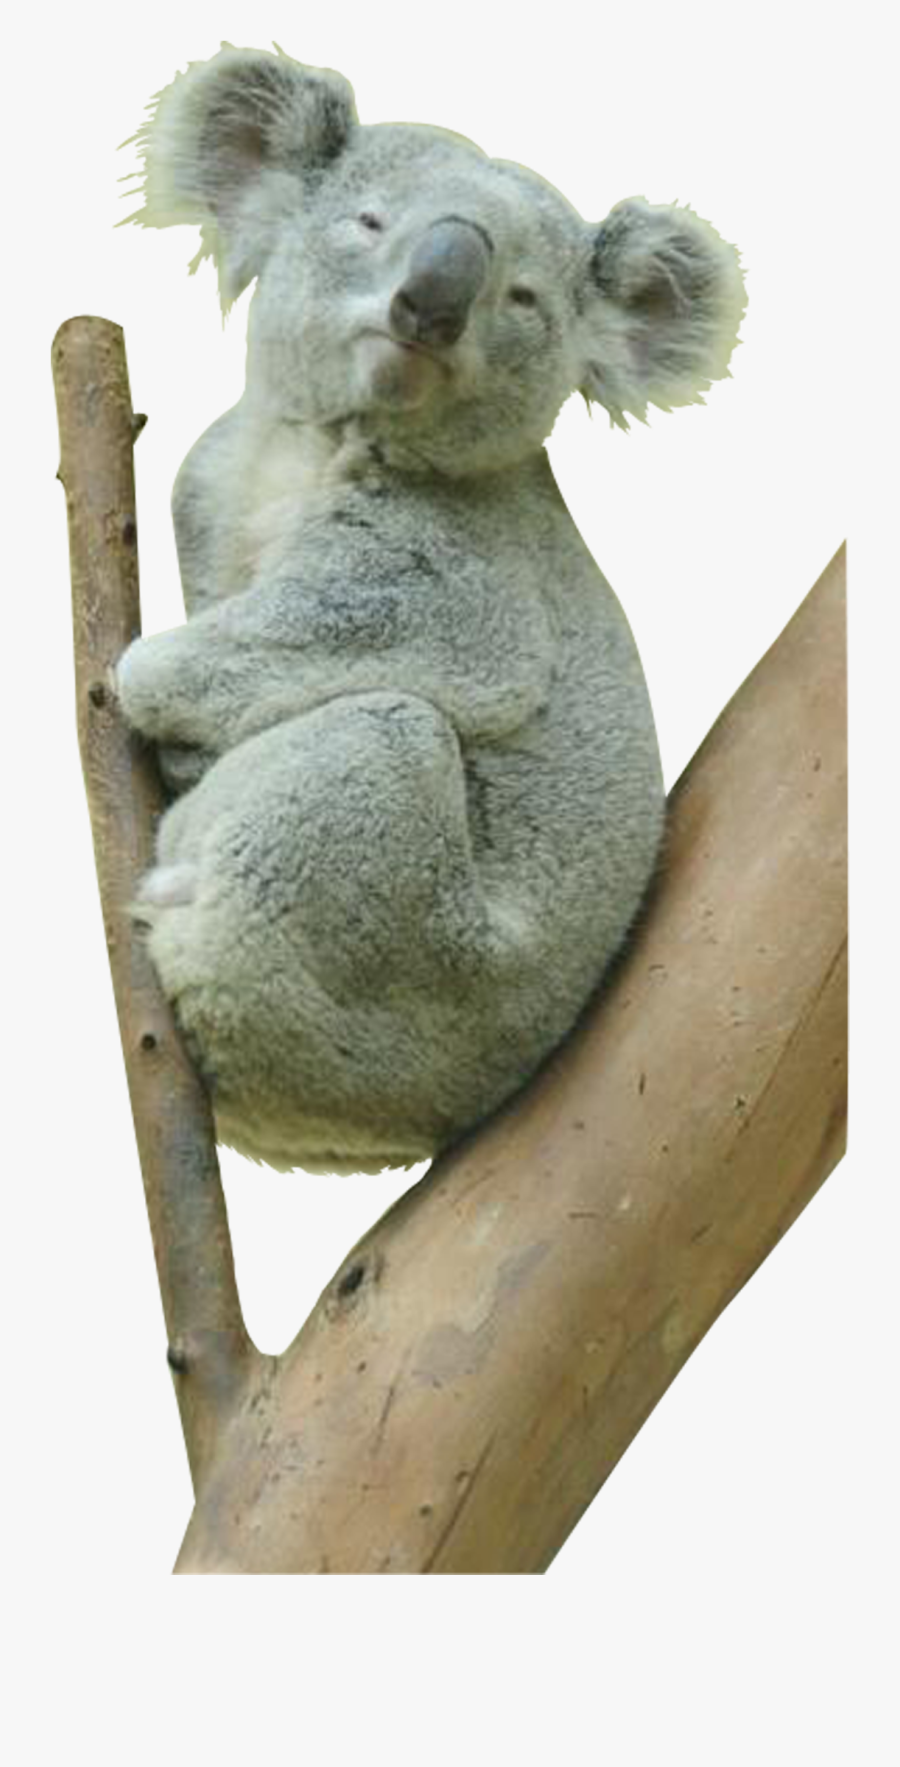 Koala Bear Png, Transparent Clipart